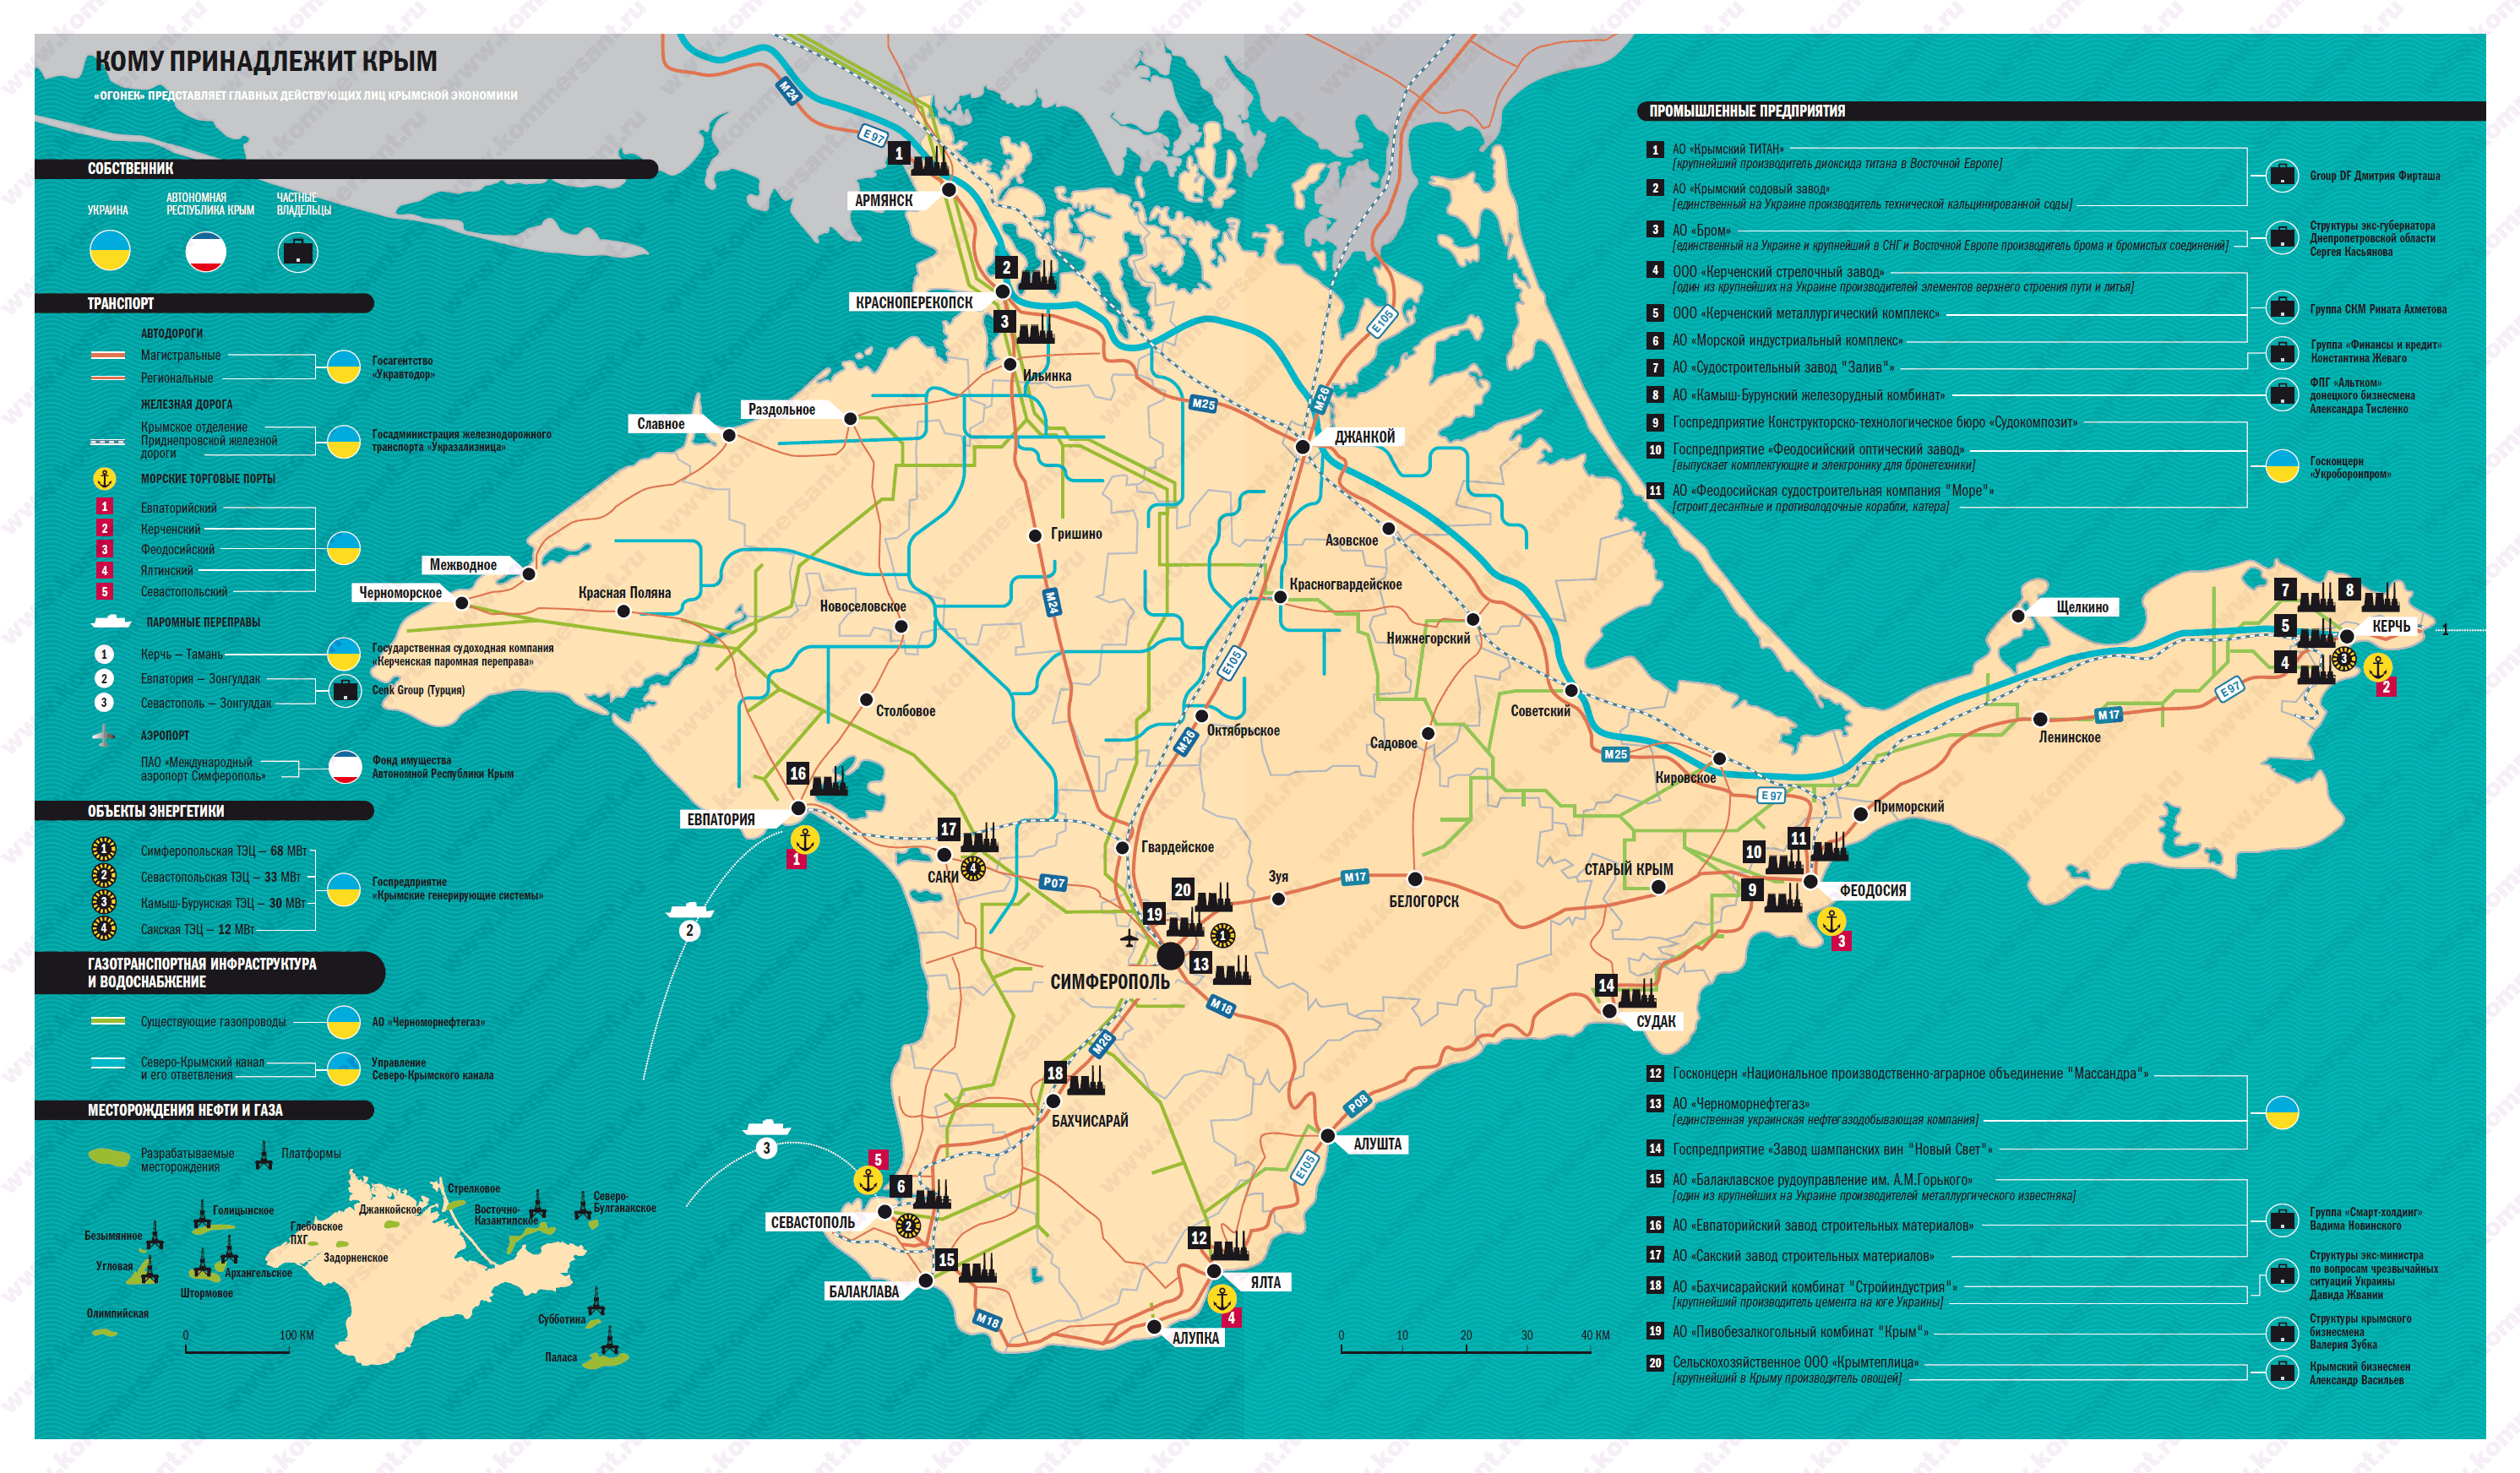 дикие пляжи крыма на карте с описанием